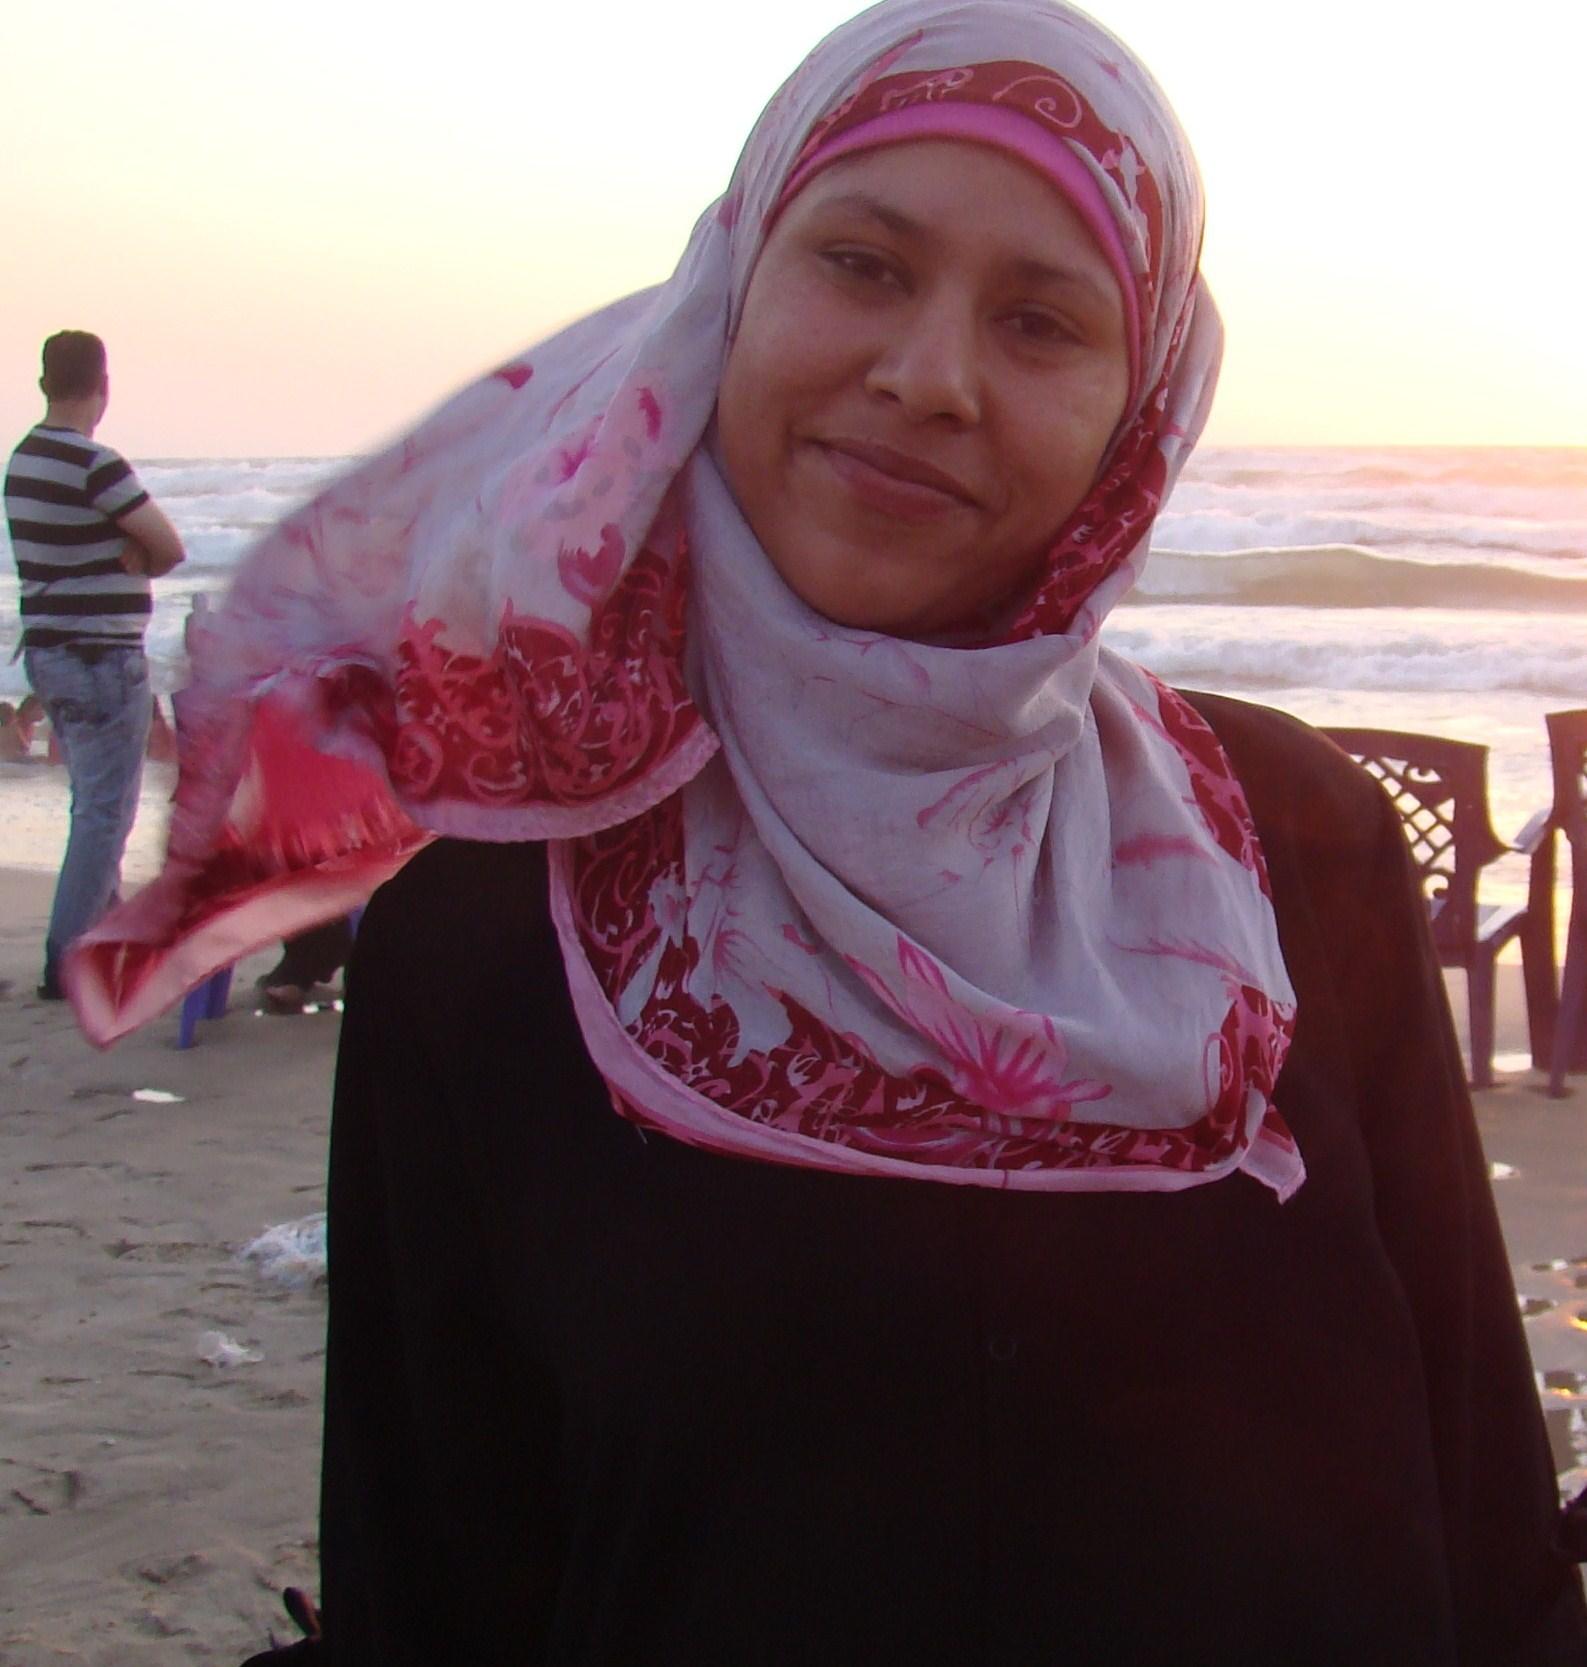 Gaza beach vox pop woman Click for big version